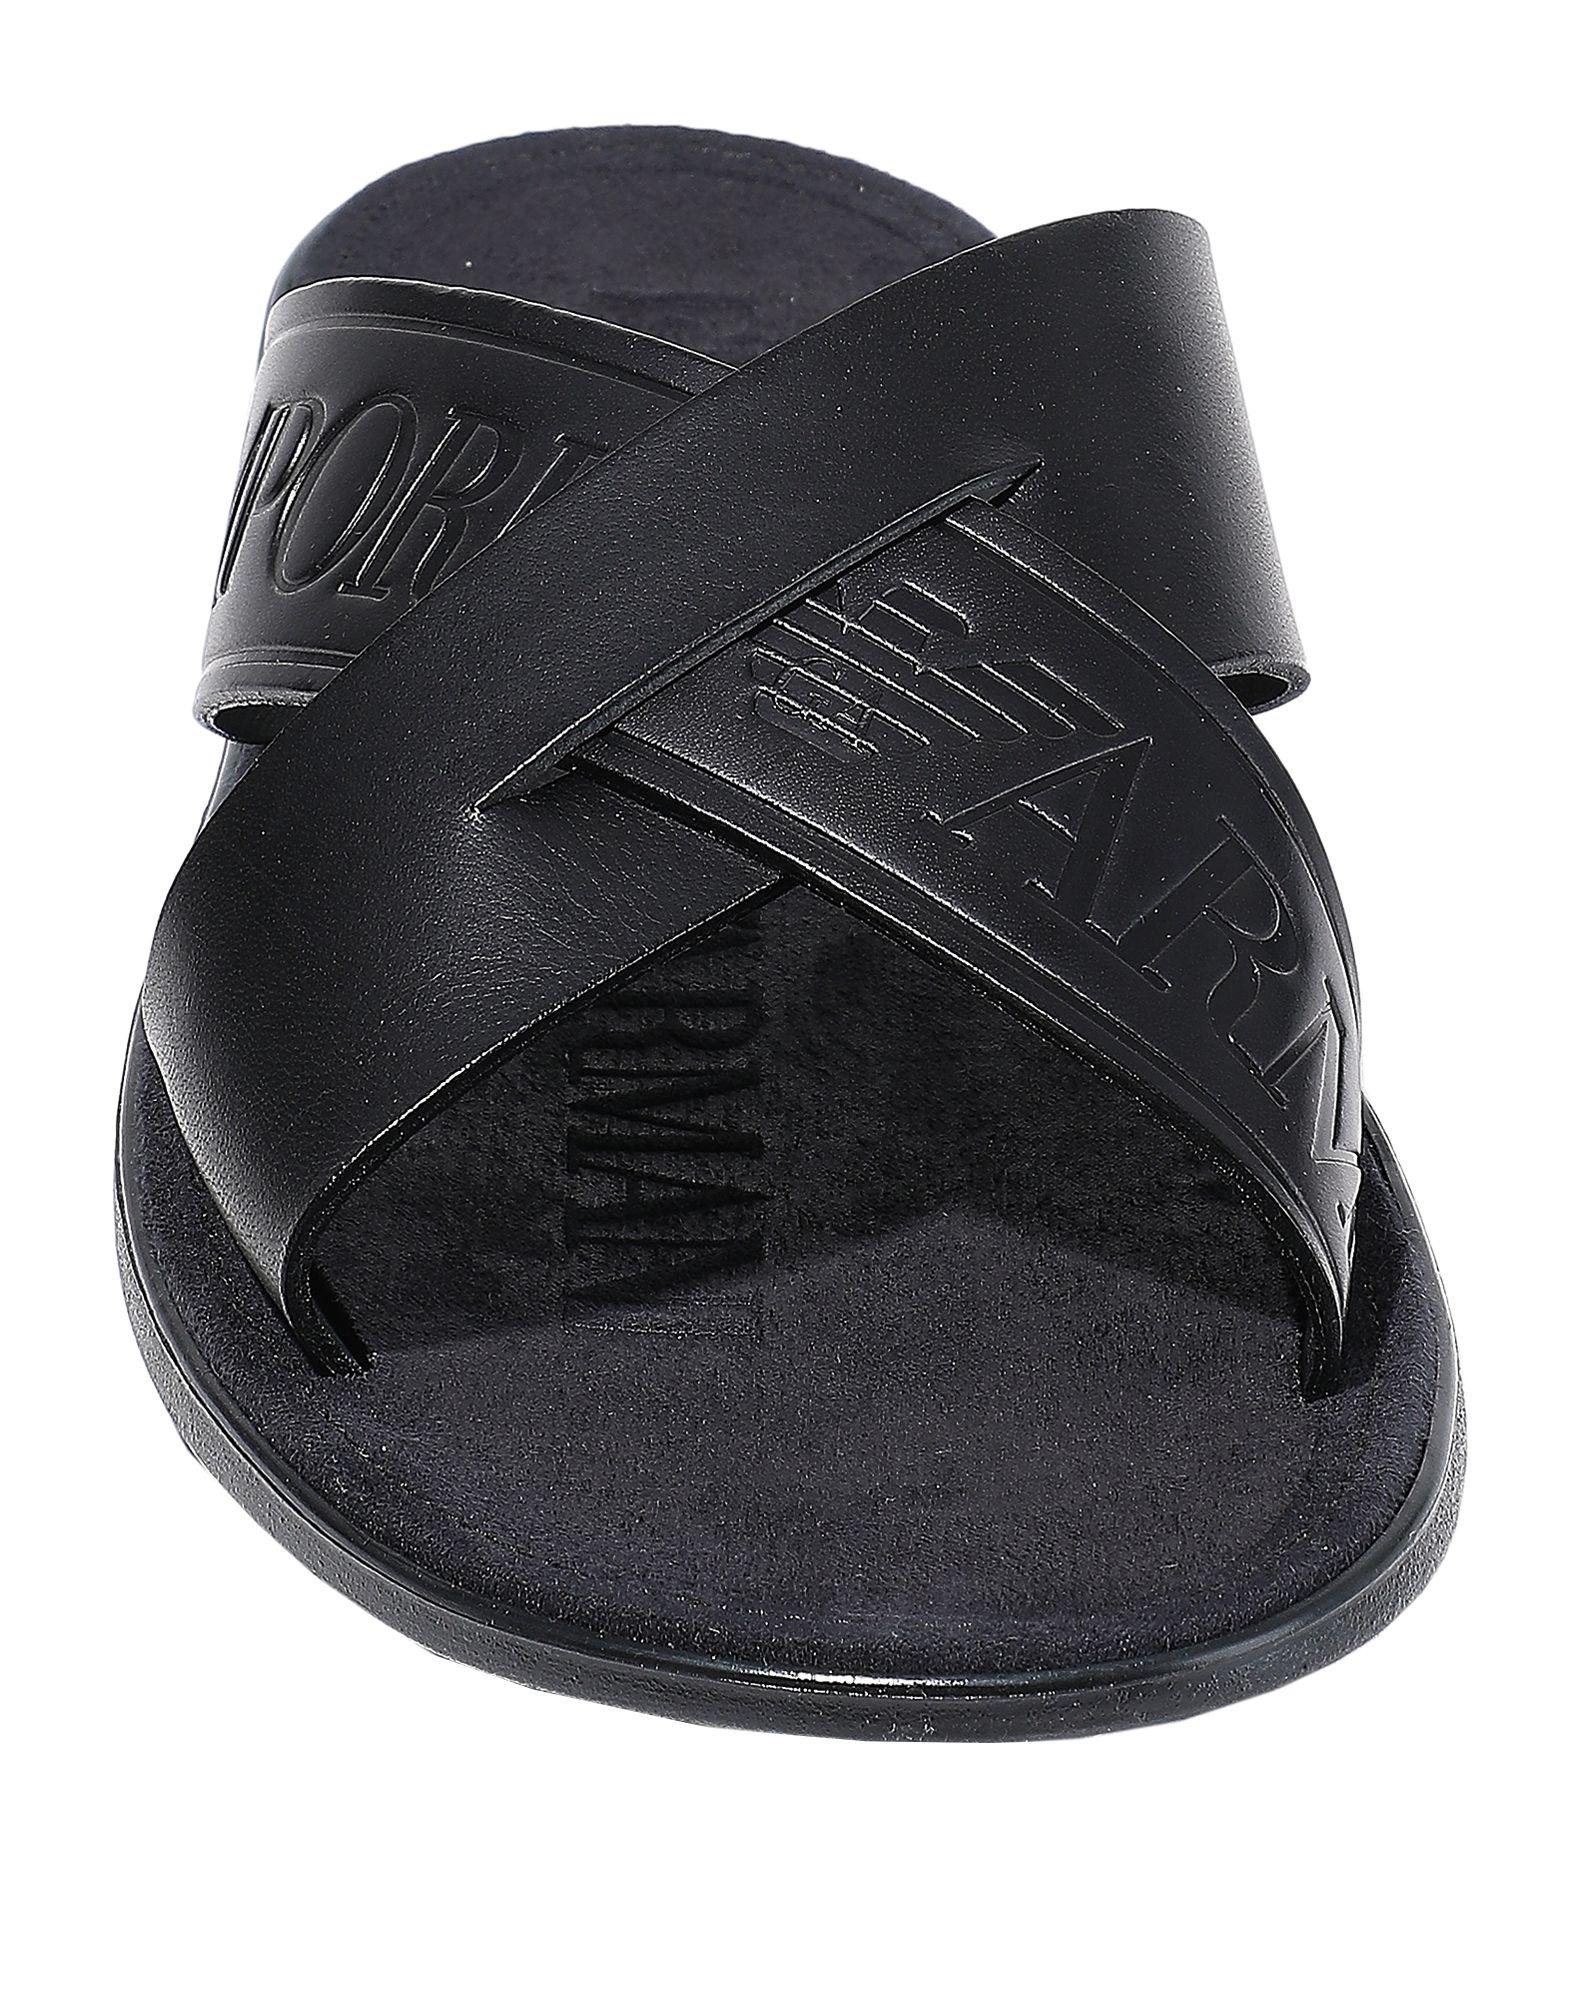 Emporio Armani Leather Sandals in Black for Men - Lyst